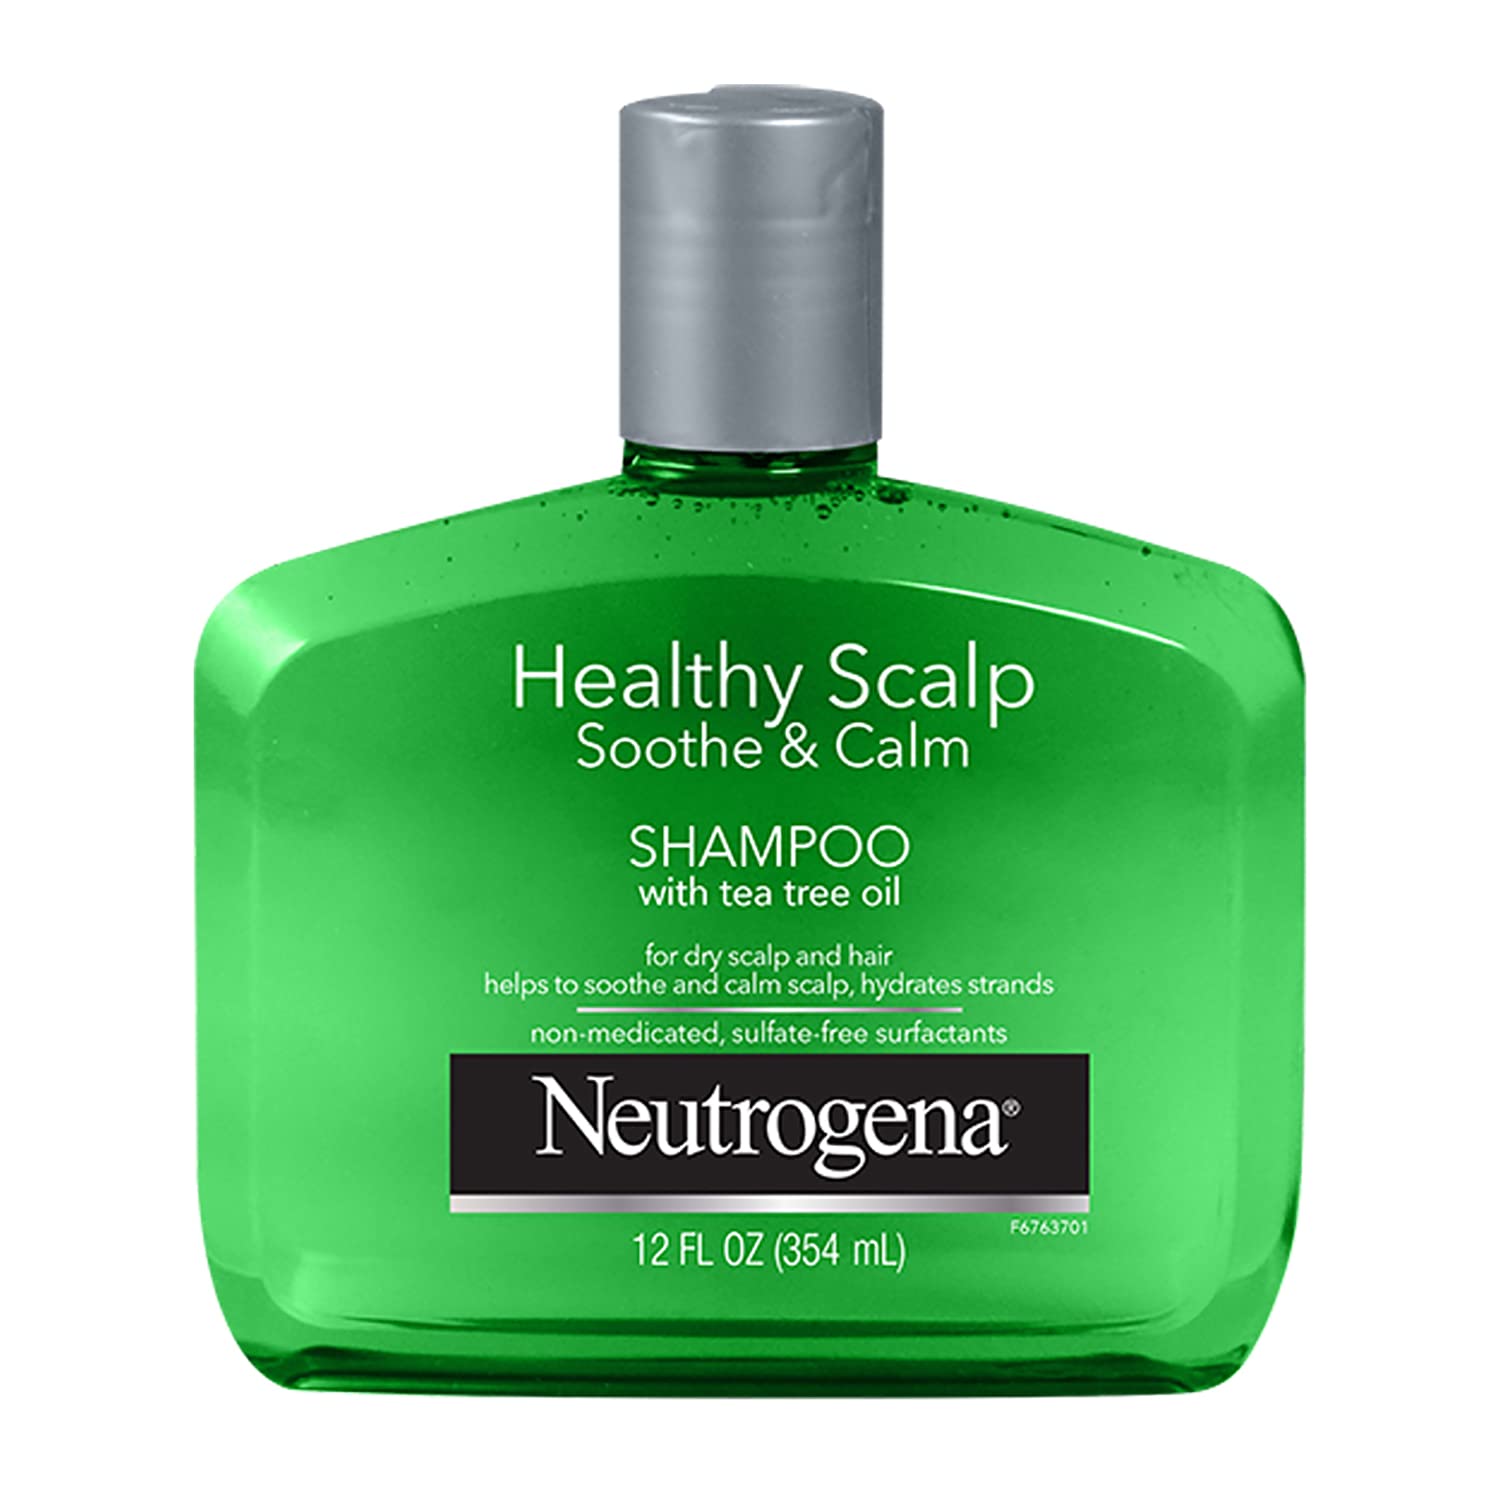 Neutrogena Soothing & Calming Healthy Scalp Shampoo to [...]